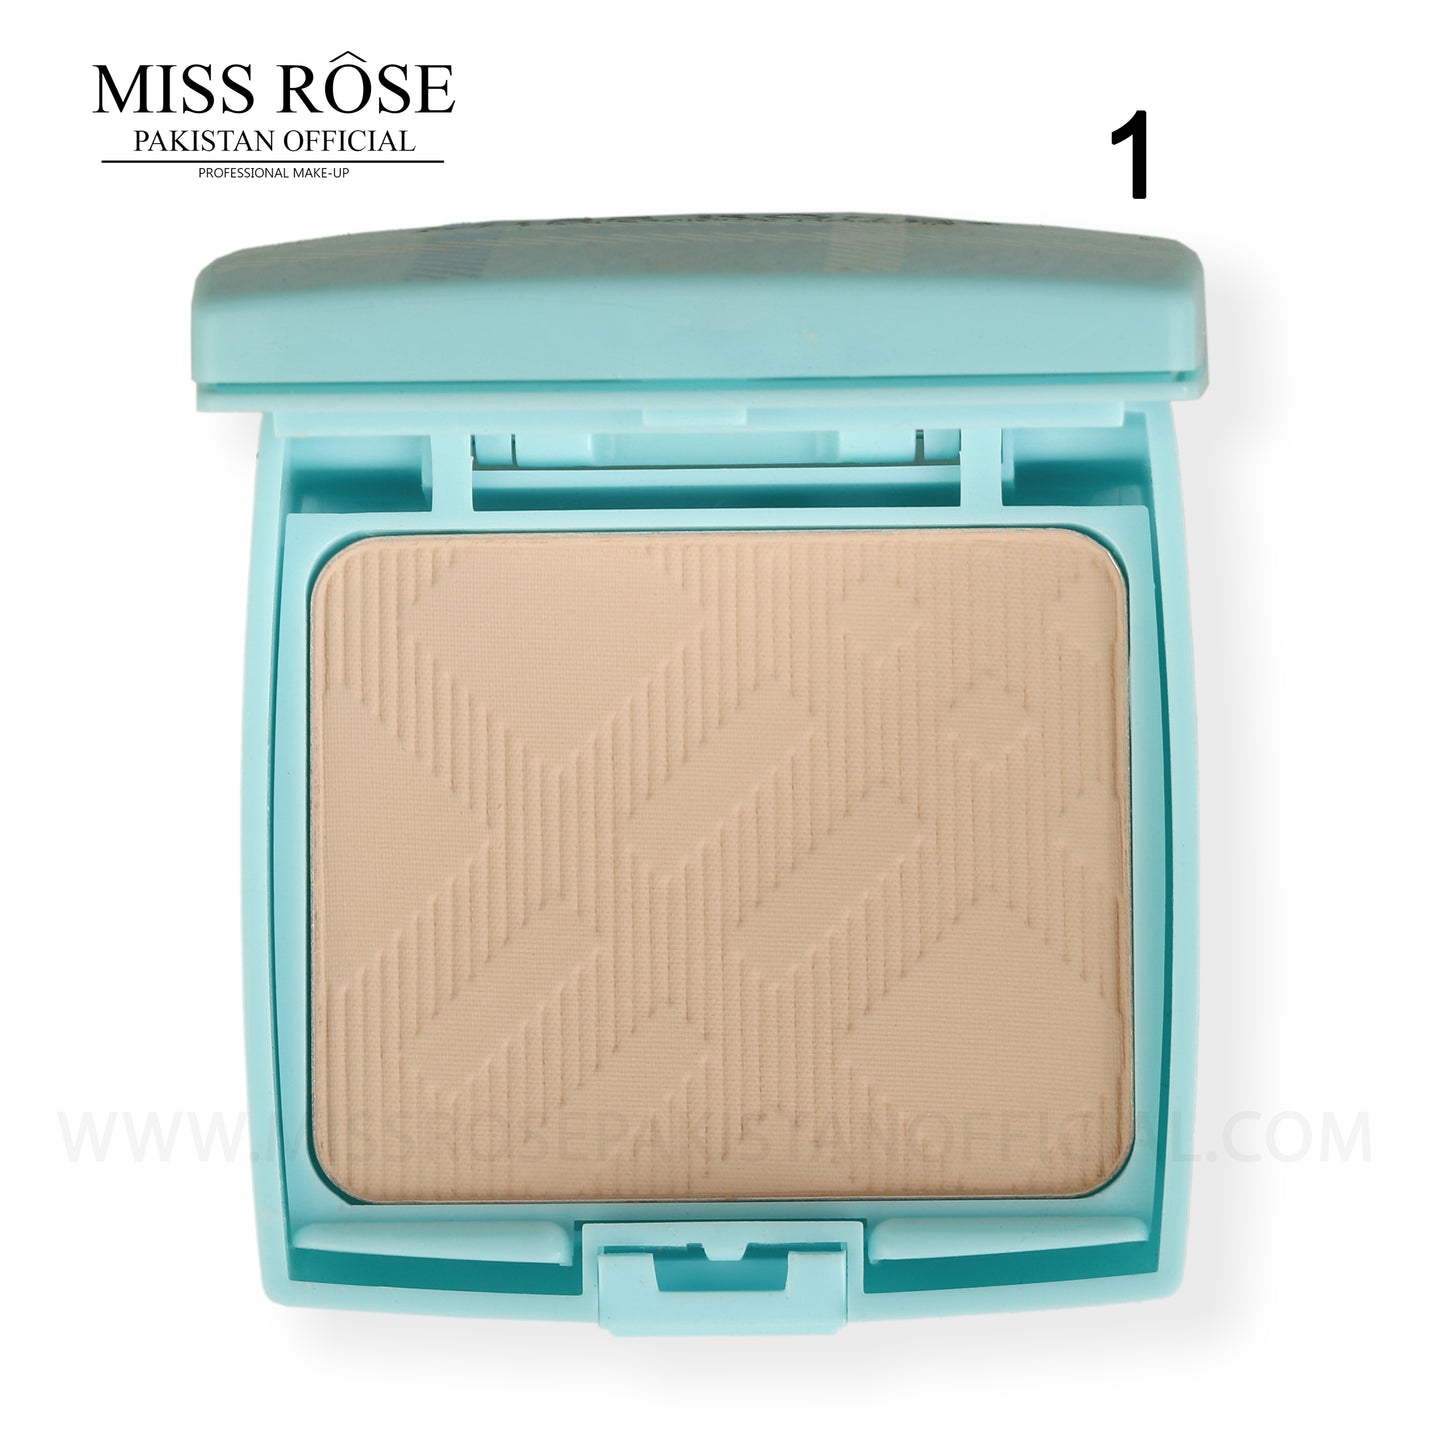 Miss Rose Compact Powder price